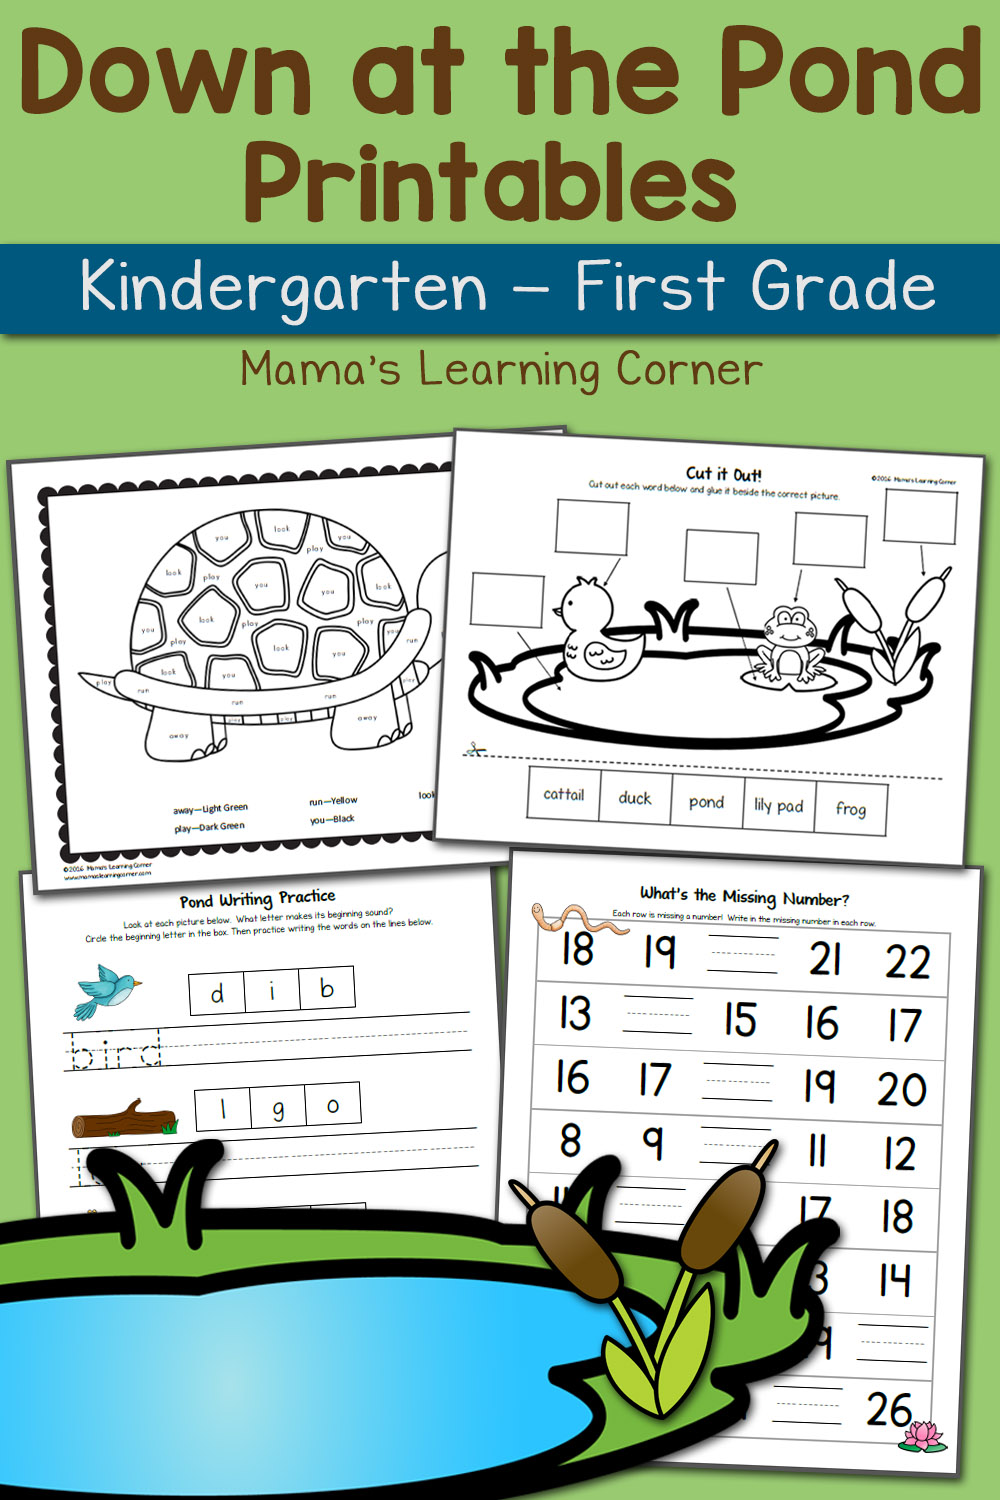 Pond Worksheets for Kindergarten and First Grade - Updated for 2016